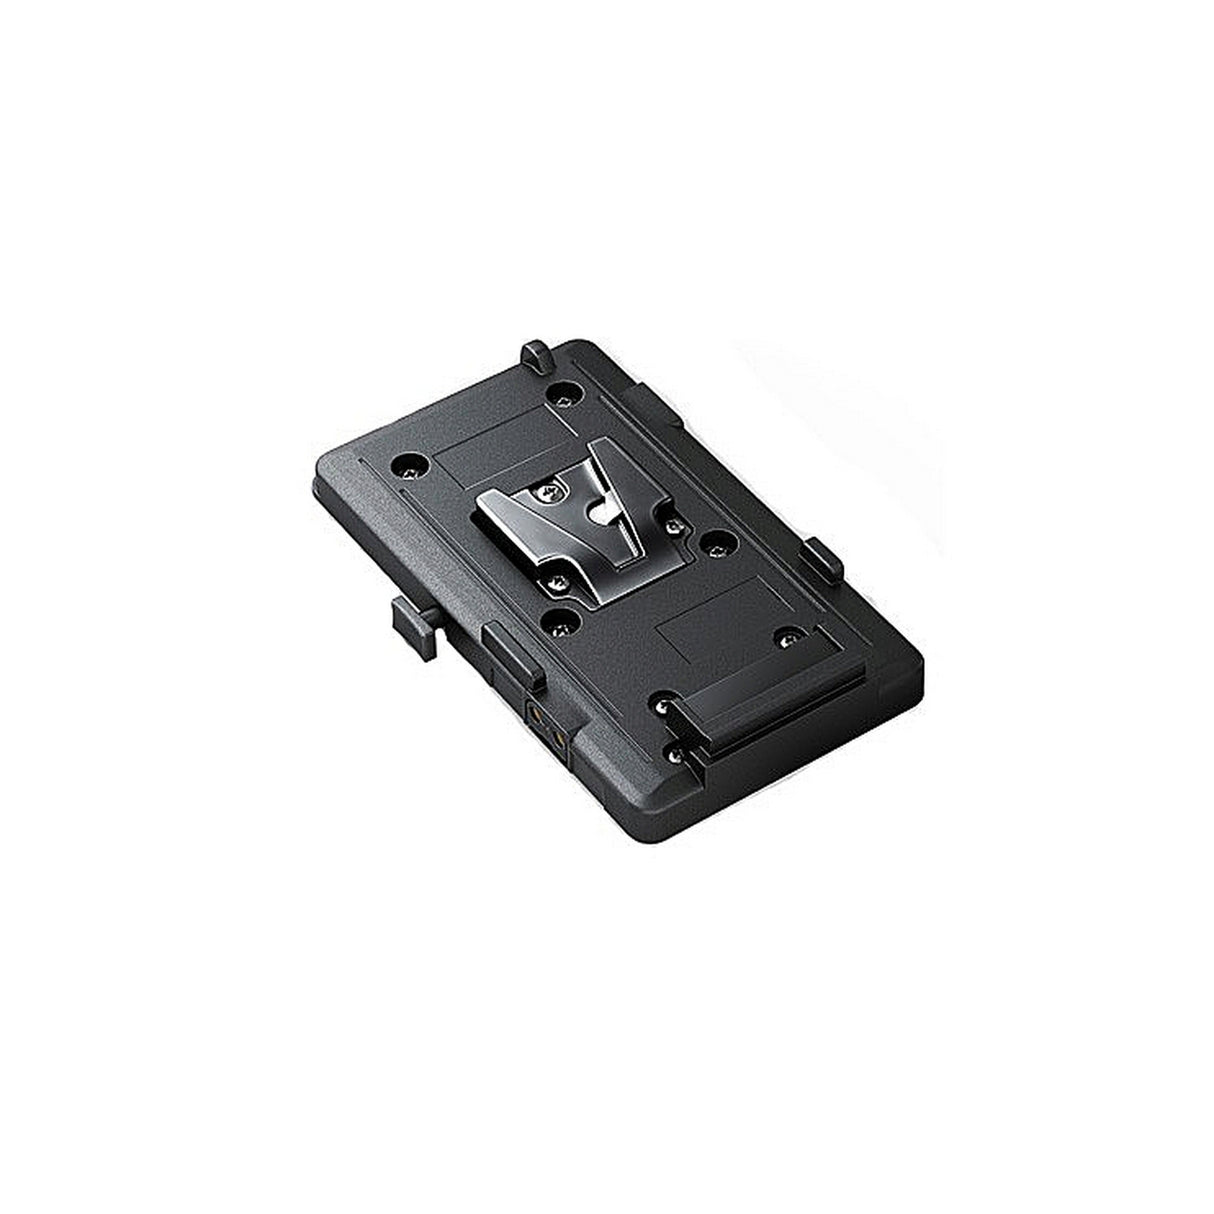 Blackmagic Design URSA VLock Battery Plate | Plate for Attaching Third Party Batteries to URSA Camera